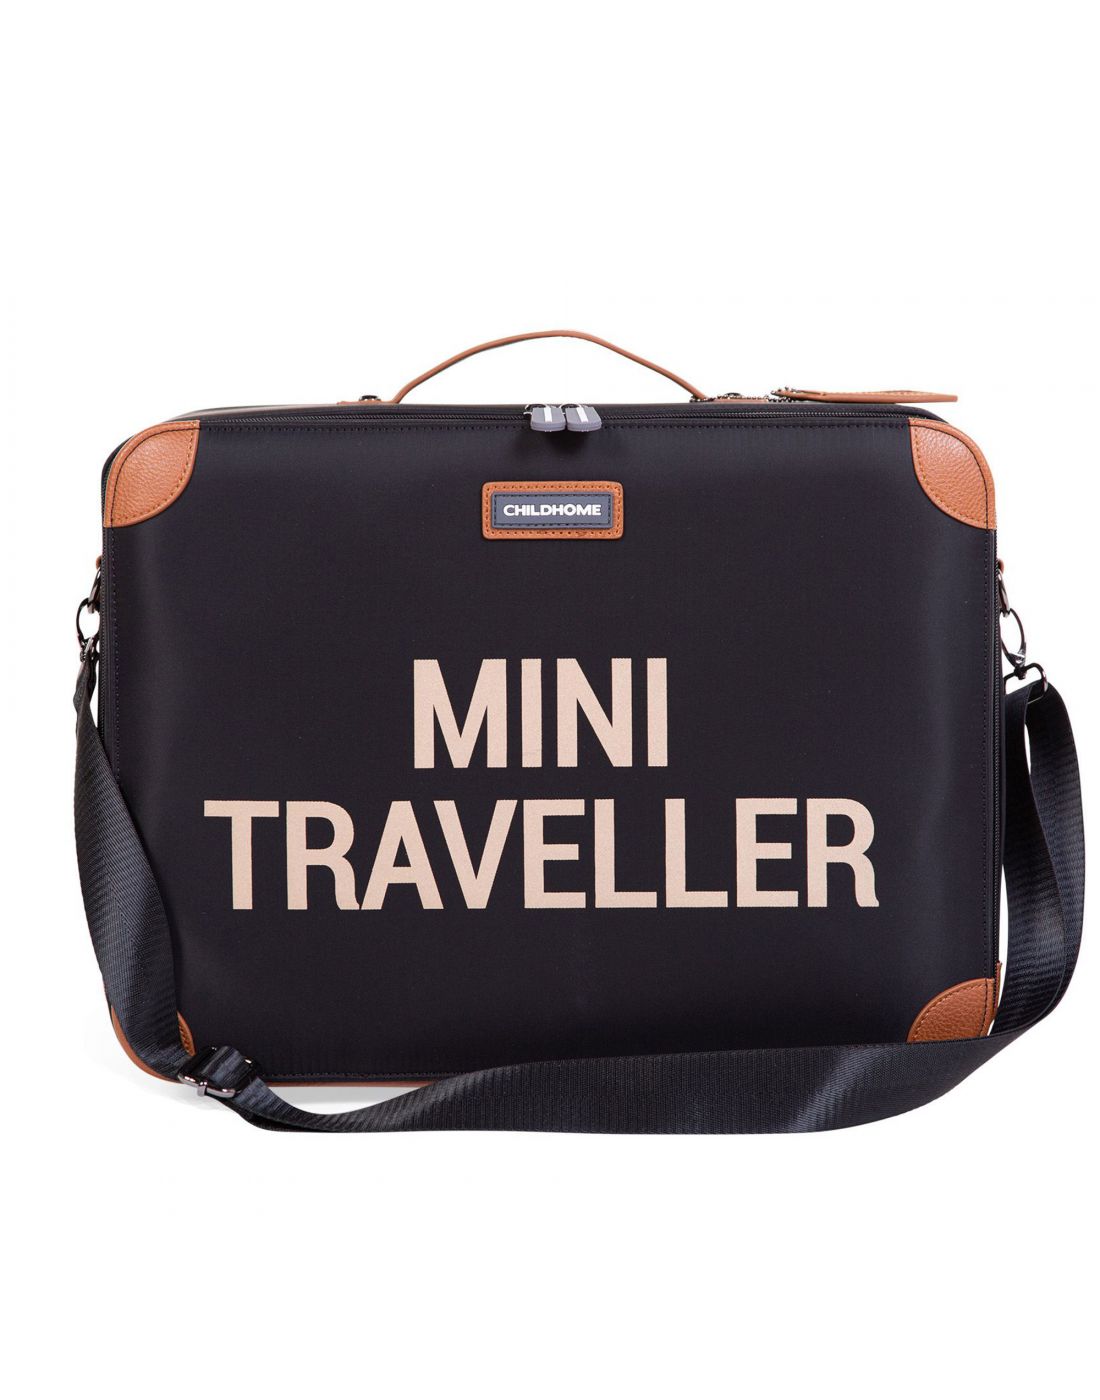 Childhome Mini Traveller Kids Suitcase Black/Gold | LAPIN KIDS